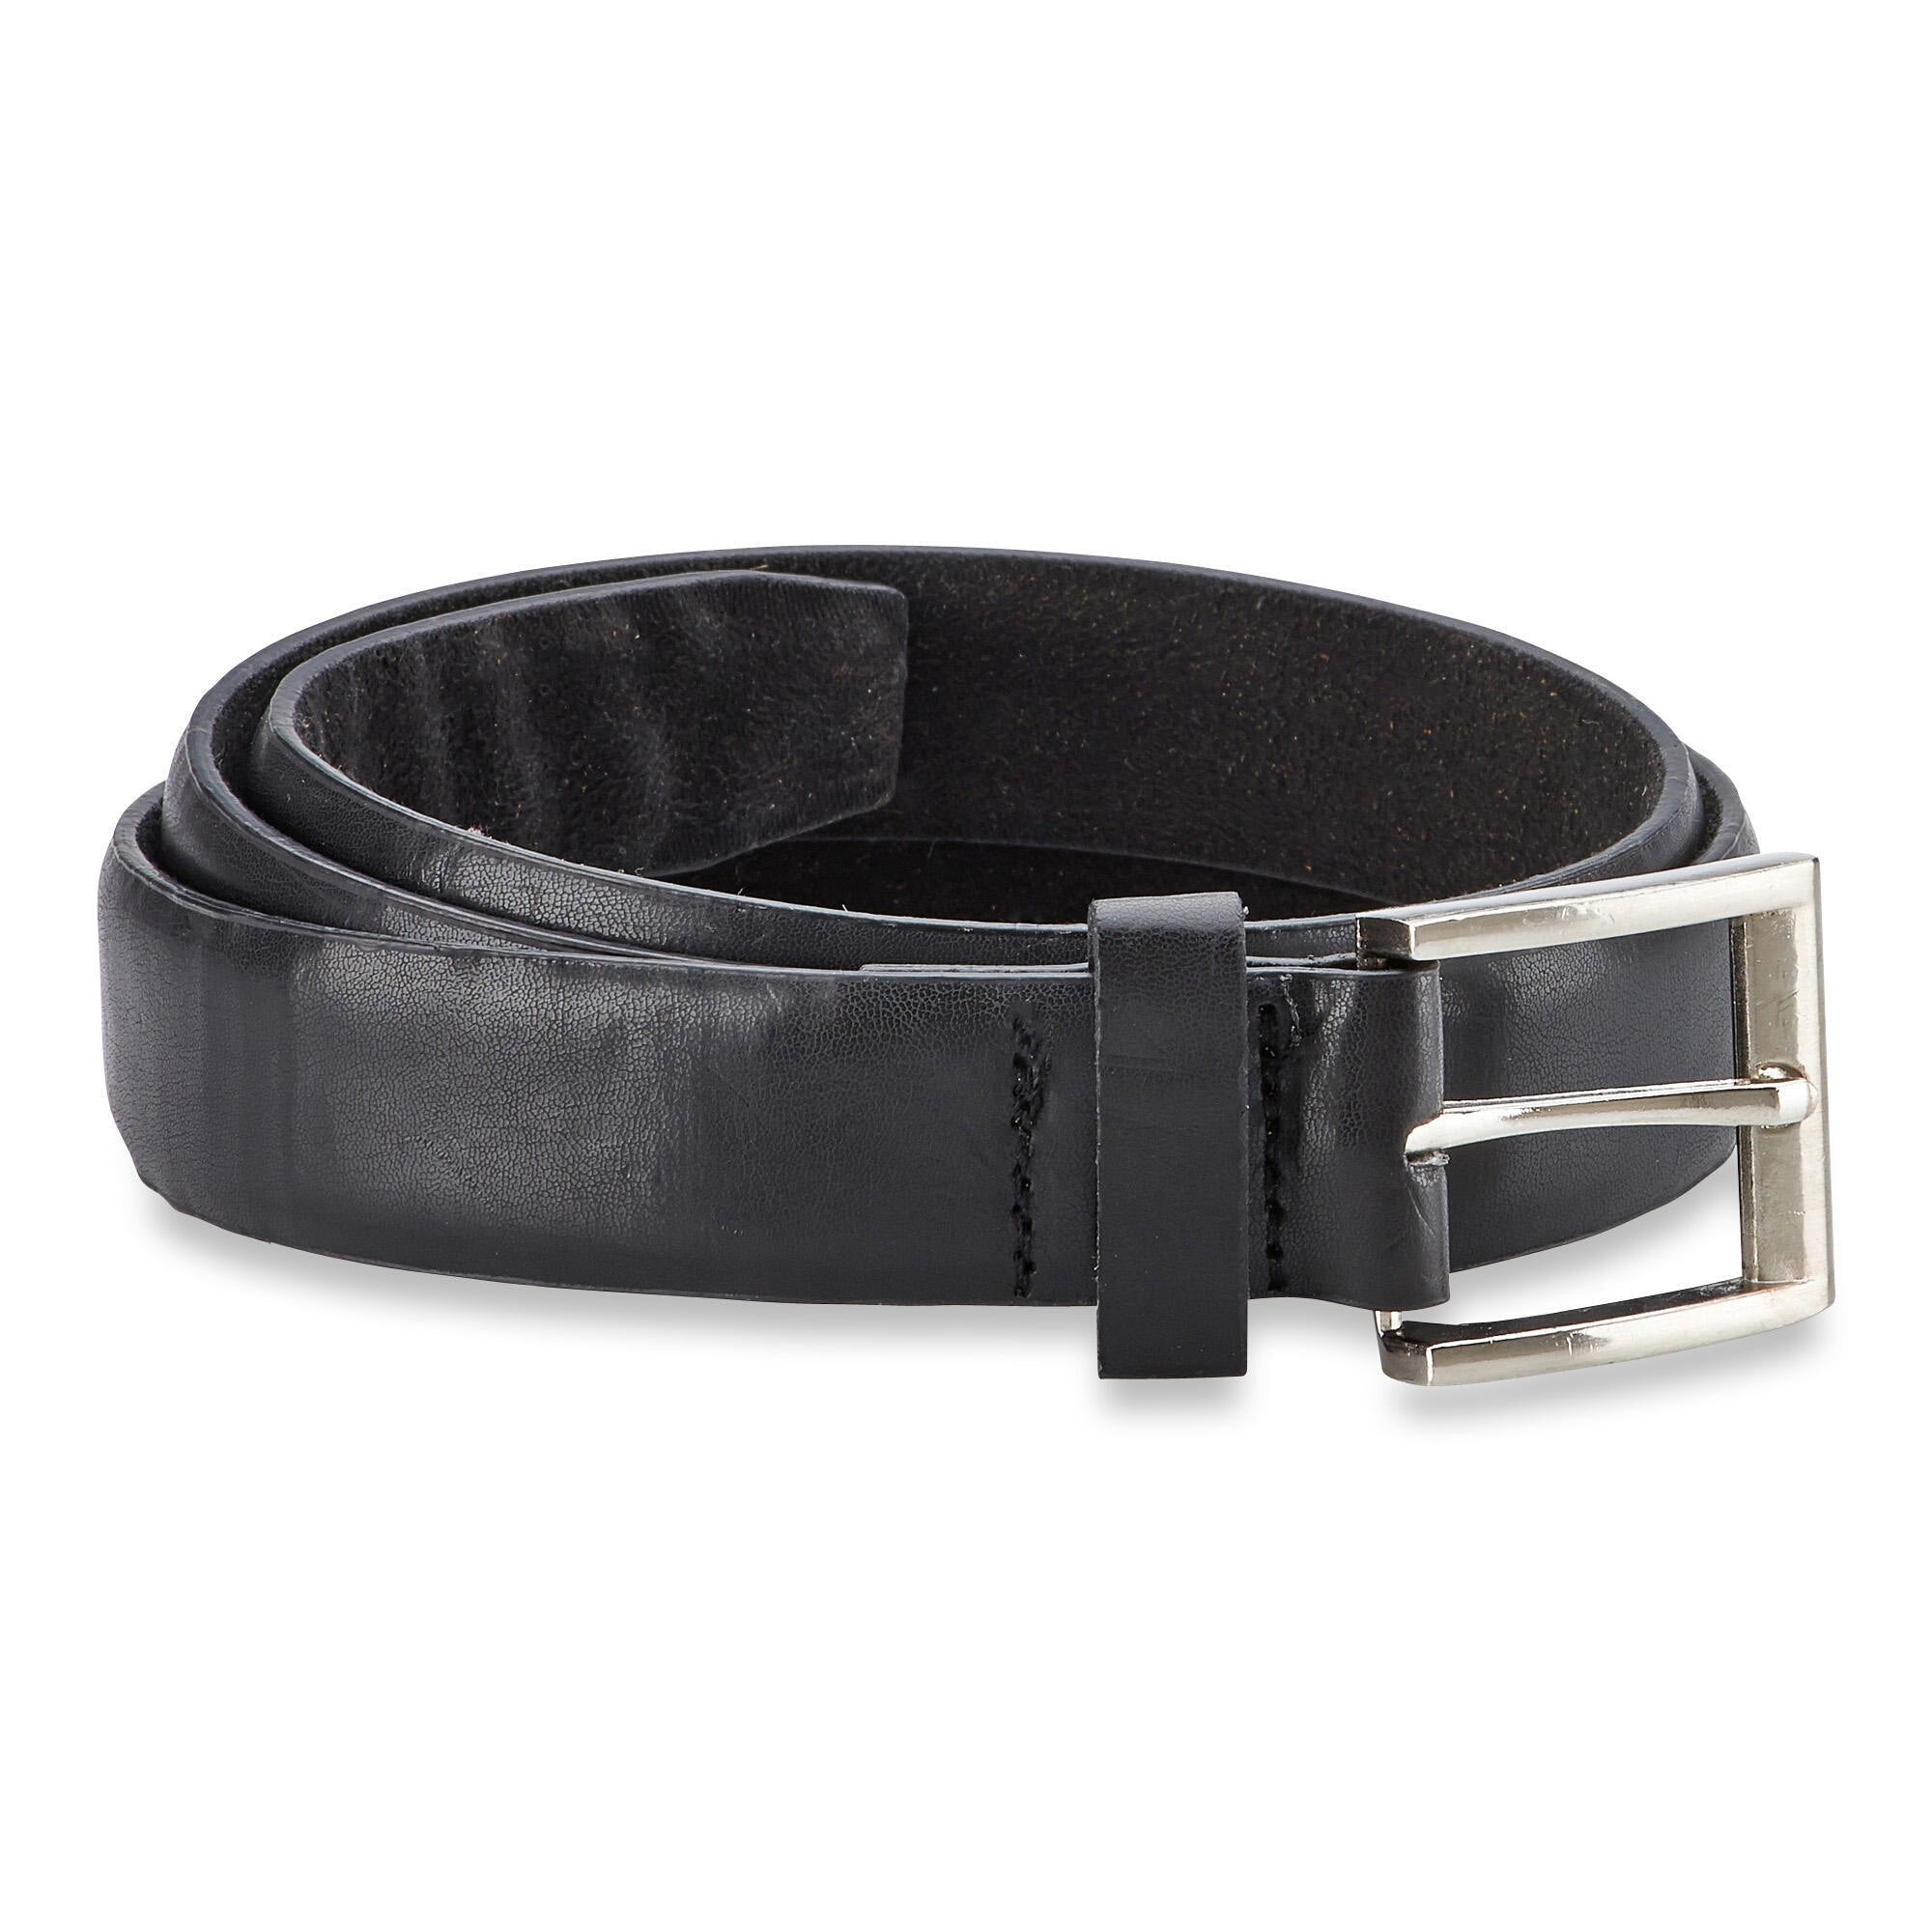 Men's Leather Belt with Basic Silver Hardware, Black – Giant Tiger